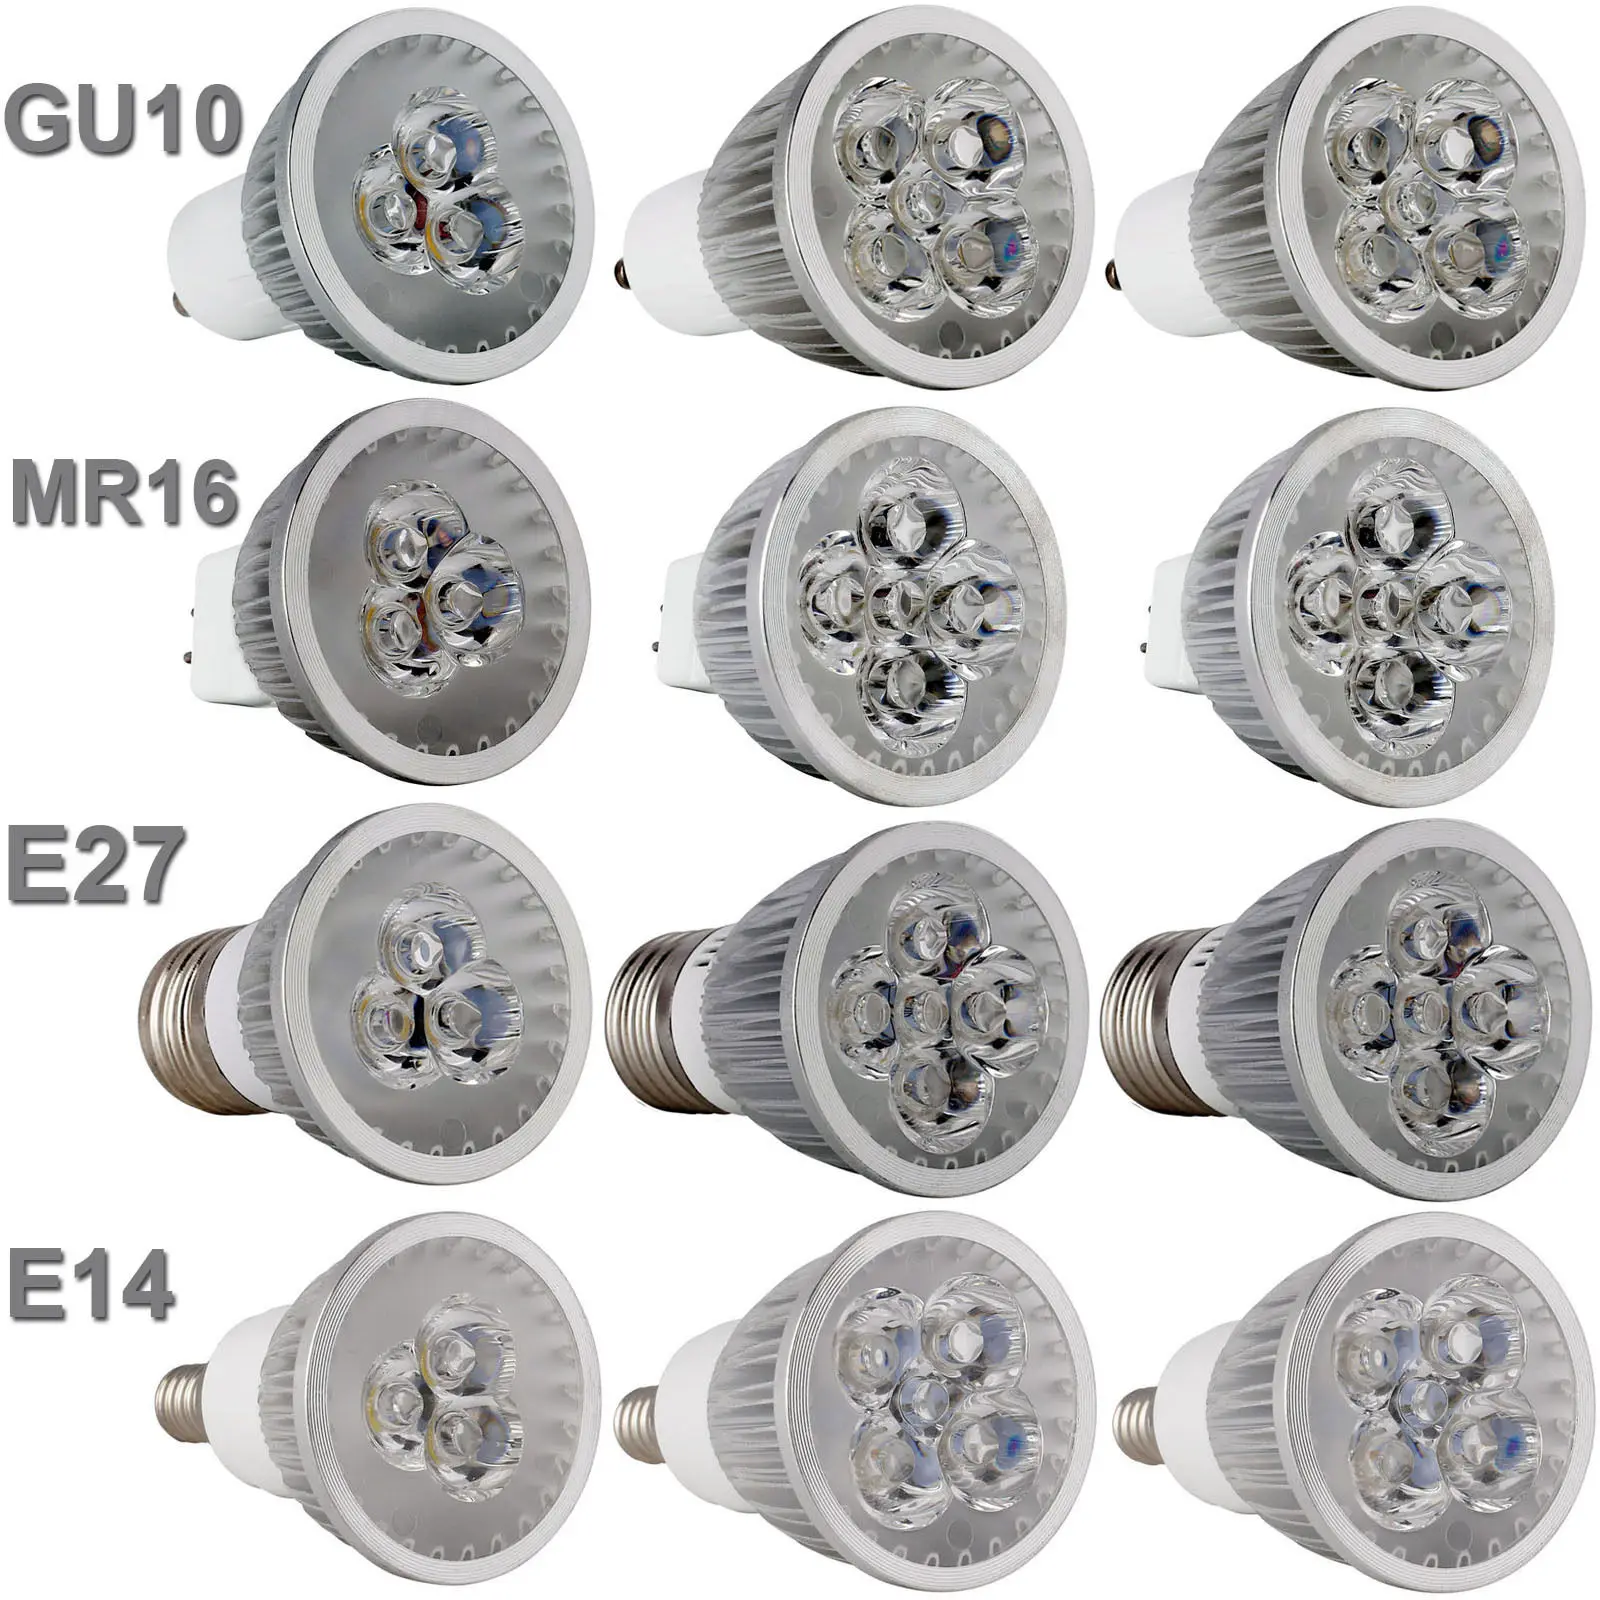 

GU10 E27 E14 LED Bulb Light DC 12V MR16 Spotlight 9W 12W 15W Replace Halogen Lamp AC 110-240V 3000K 4000K 6500k Energy Saving